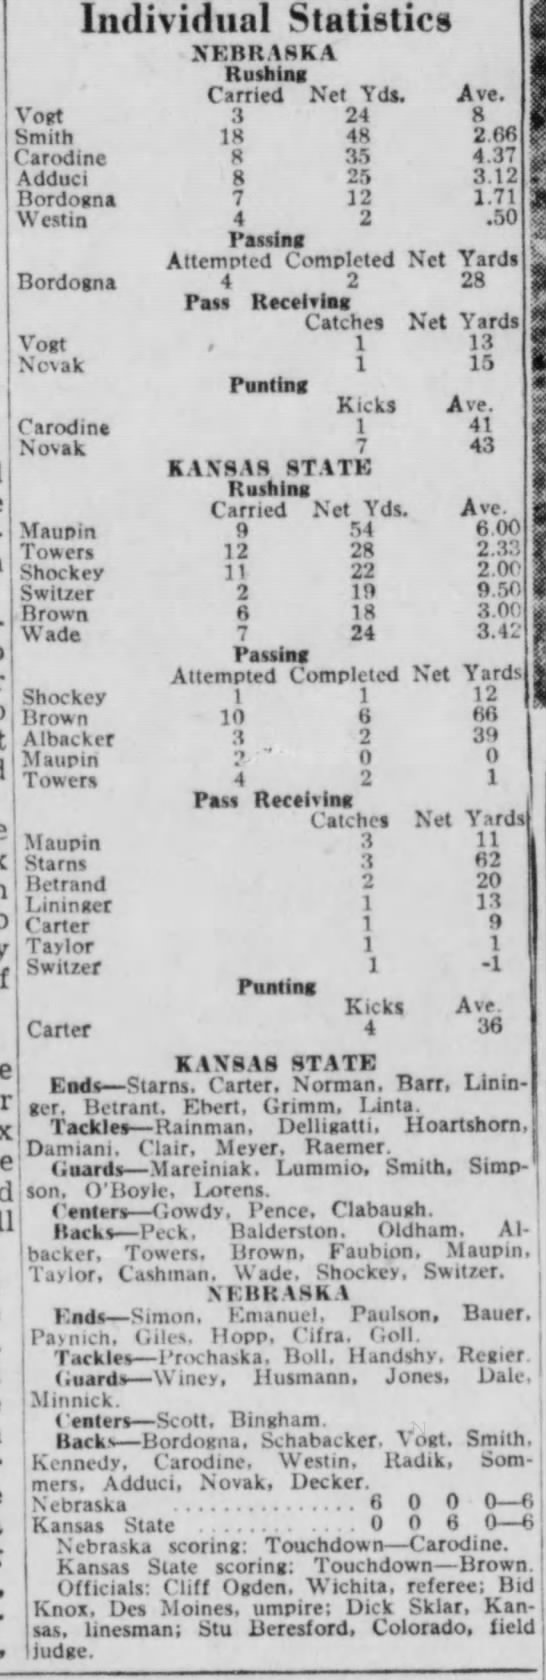 1951 Nebraska-Kansas State individual stats - 